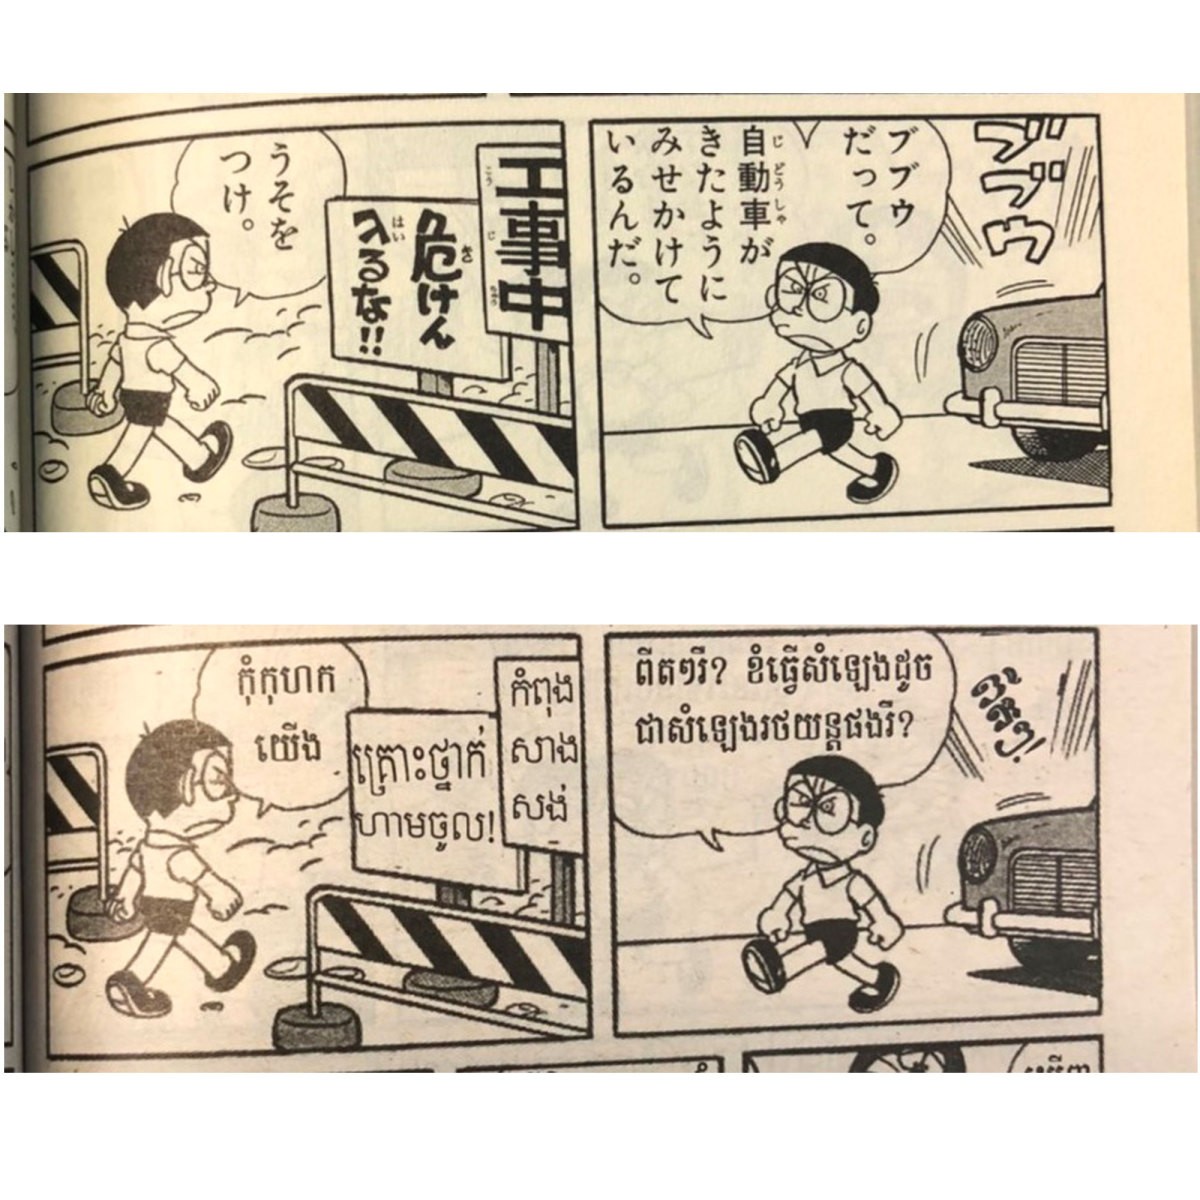  Doraemon 9 volume Cambodia language (k mail language ). earth production gift manga comics collection 